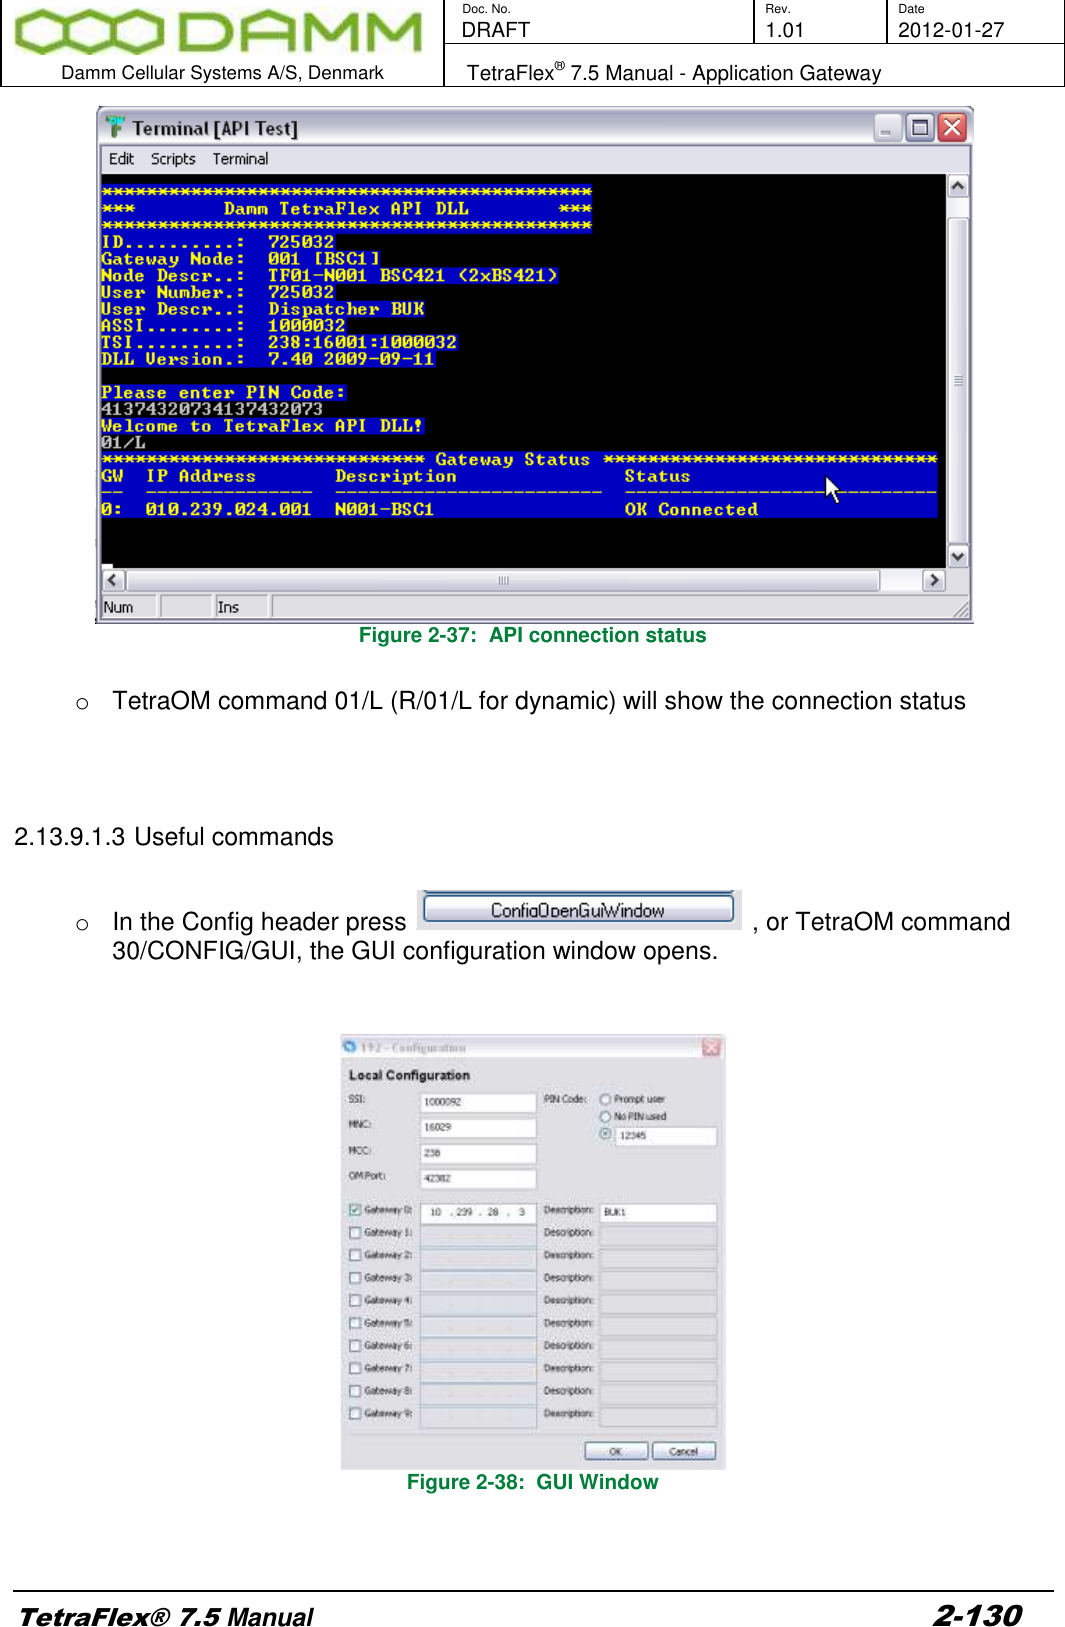        Doc. No. Rev. Date    DRAFT  1.01 2012-01-27  Damm Cellular Systems A/S, Denmark   TetraFlex® 7.5 Manual - Application Gateway  TetraFlex® 7.5 Manual 2-130   Figure 2-37:  API connection status  o  TetraOM command 01/L (R/01/L for dynamic) will show the connection status    2.13.9.1.3 Useful commands  o  In the Config header press   , or TetraOM command 30/CONFIG/GUI, the GUI configuration window opens.    Figure 2-38:  GUI Window   